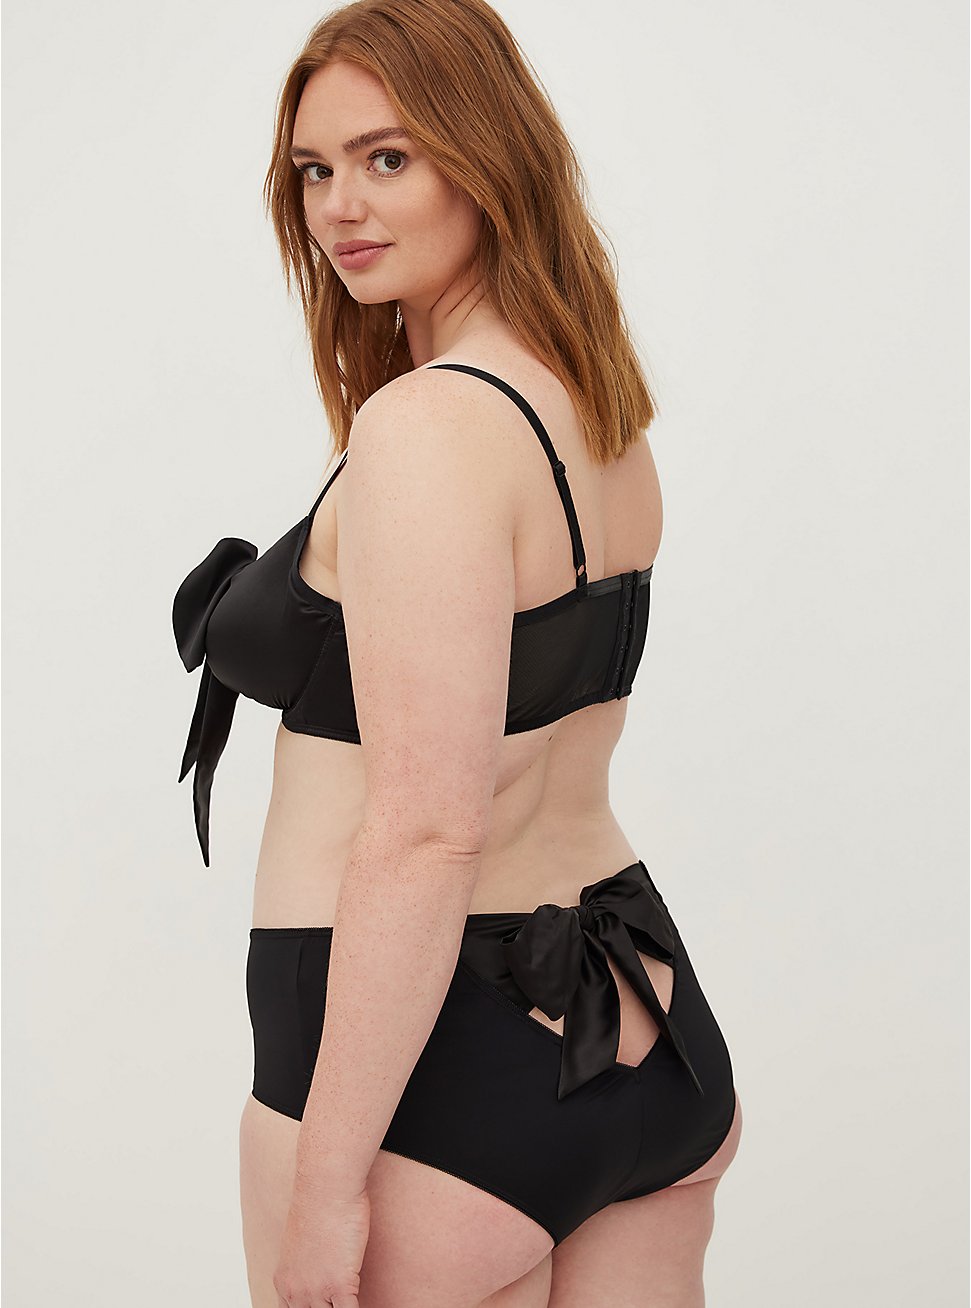 Plus Size Open Back Cheeky Panty - Satin & Lace Bow Black, RICH BLACK, hi-res